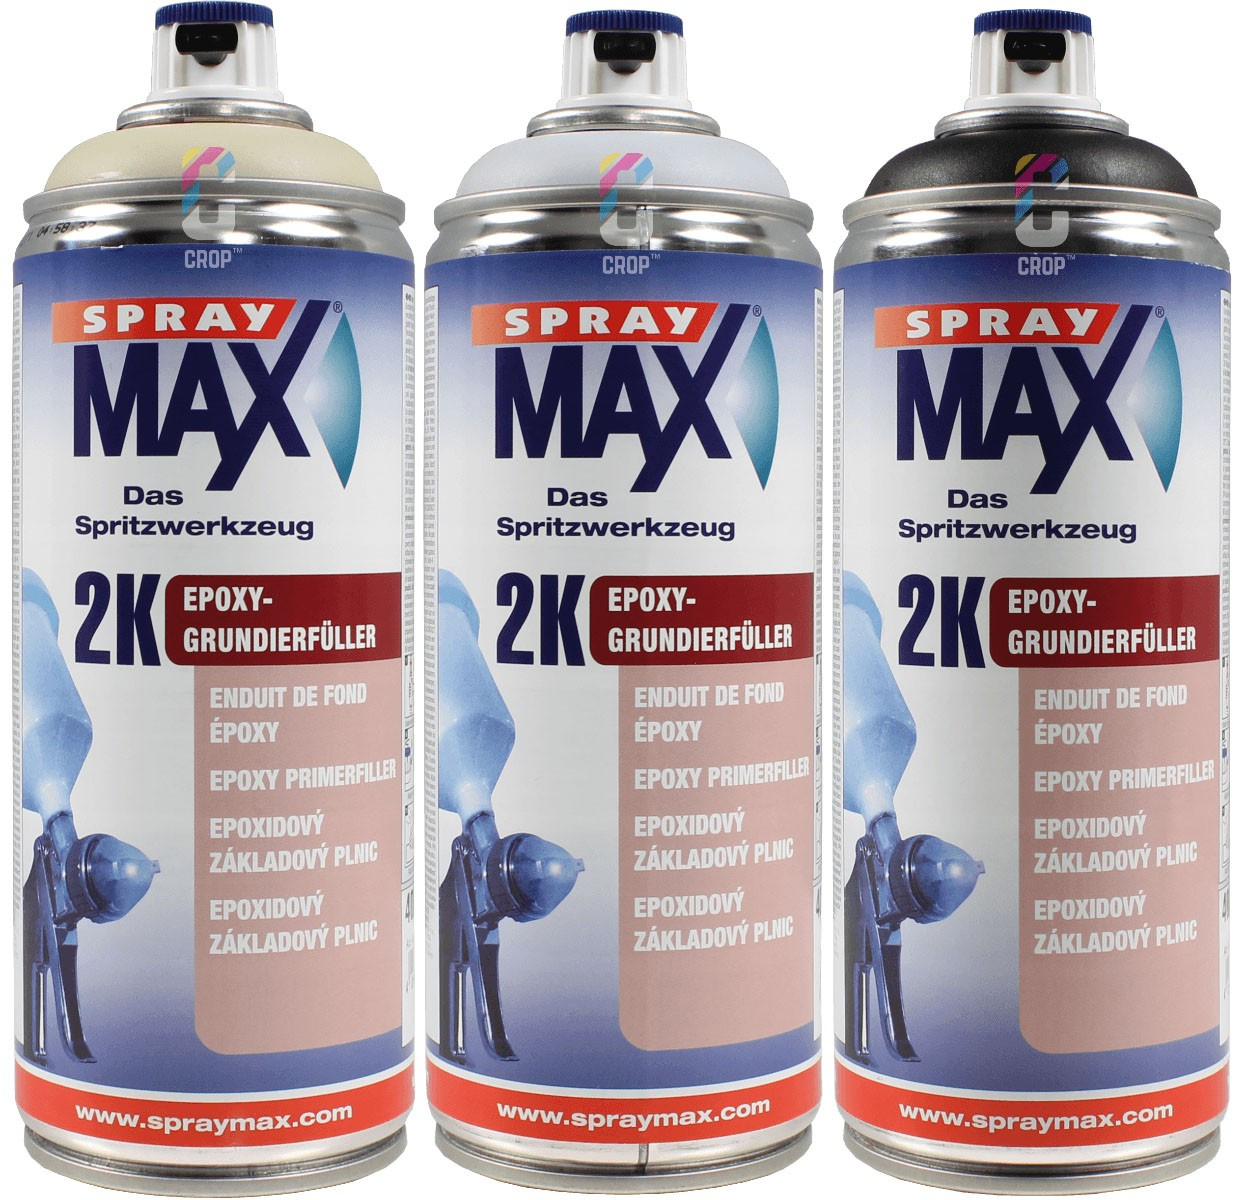 2K Epoxy Spuitbus SprayMax 400ml - CROP